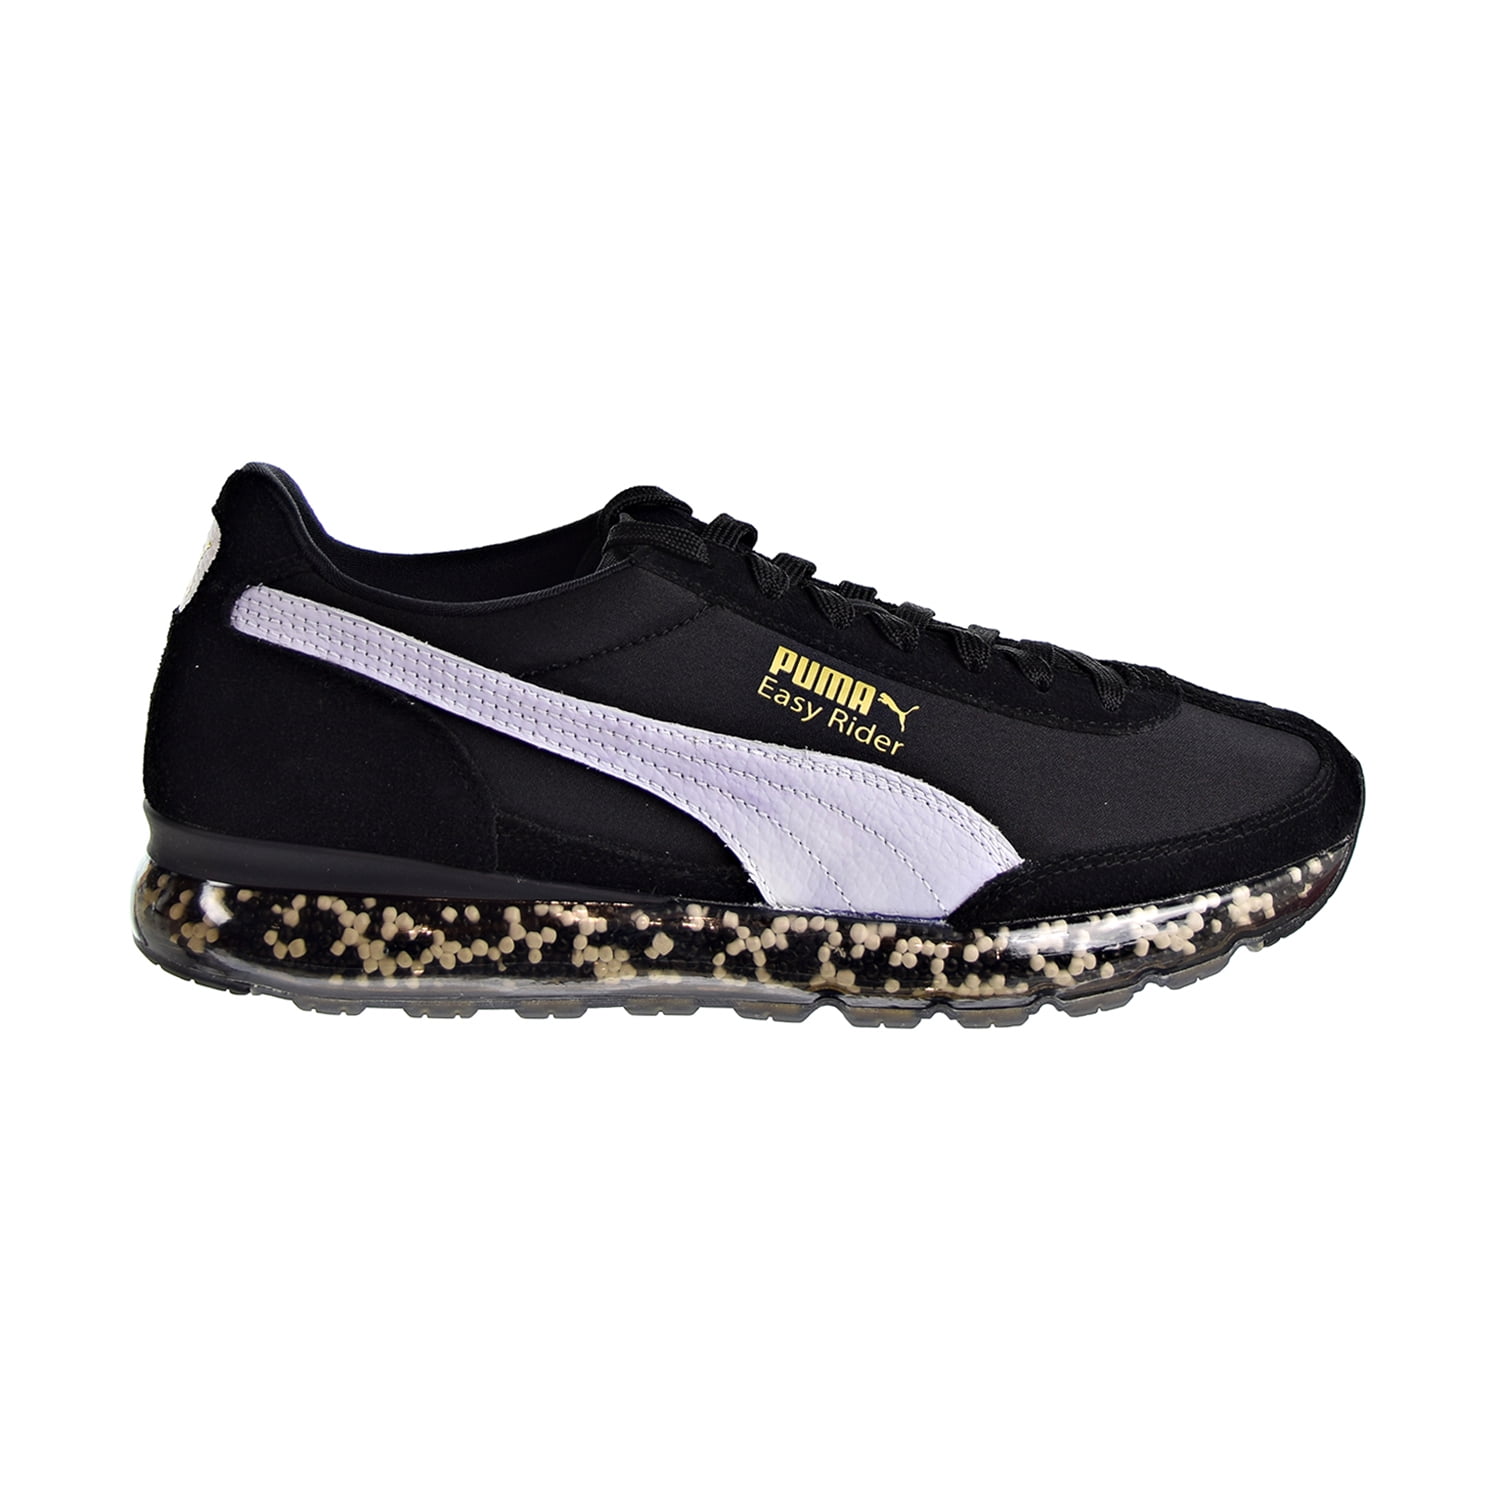 Shoes Puma Black/Puma White 367832-01 